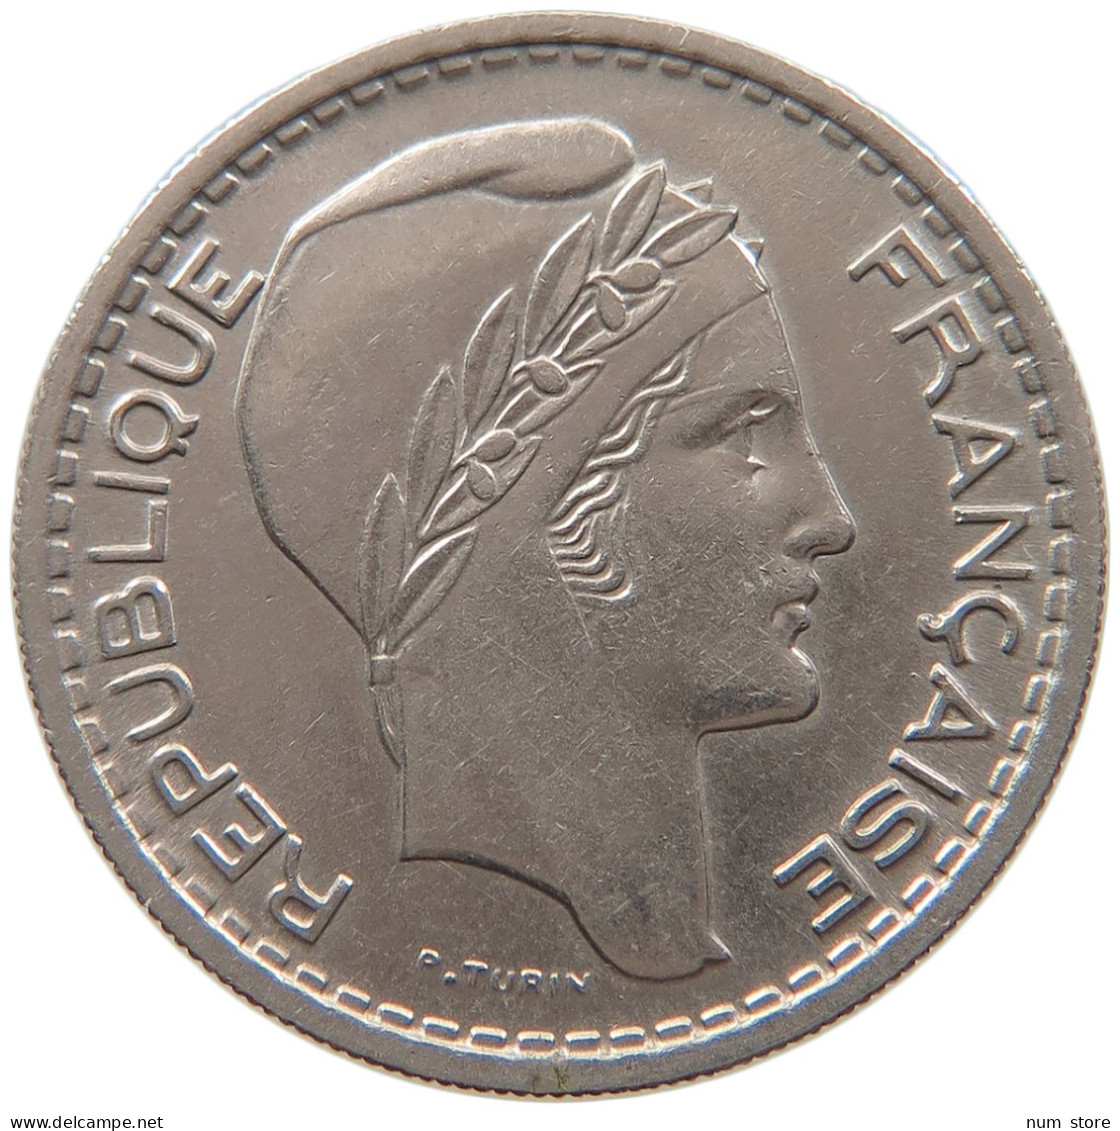 FRANCE 10 FRANCS 1948 #s100 0293 - 10 Francs